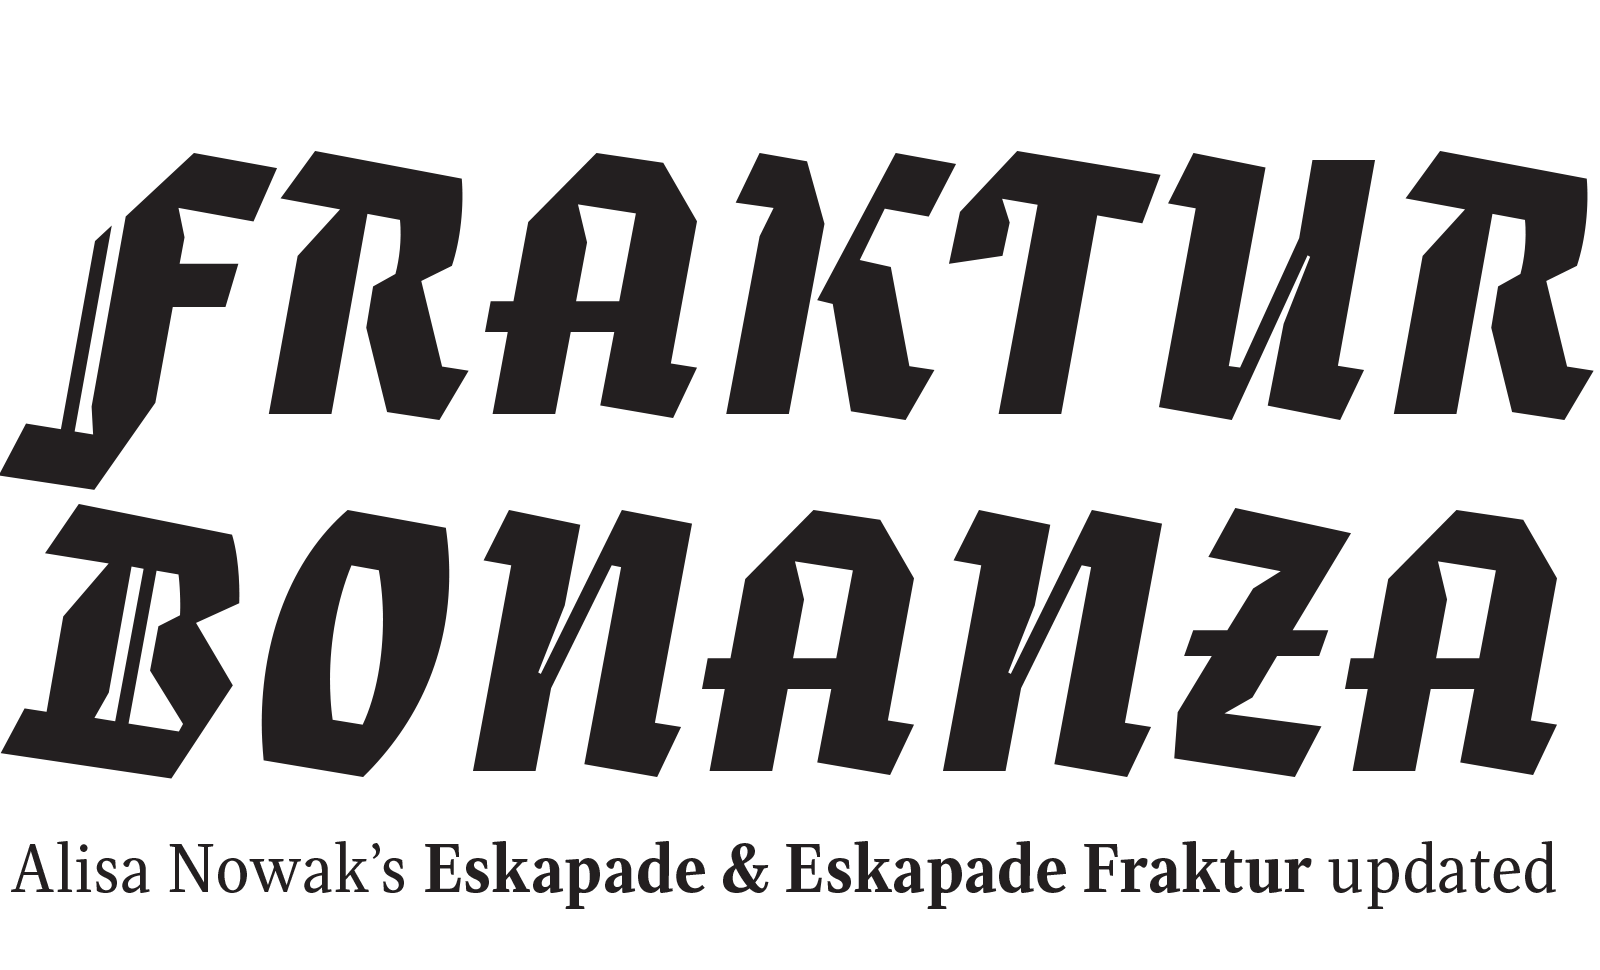 Alisa Nowak’s Eskapade and Eskapade Fraktur updated and extended